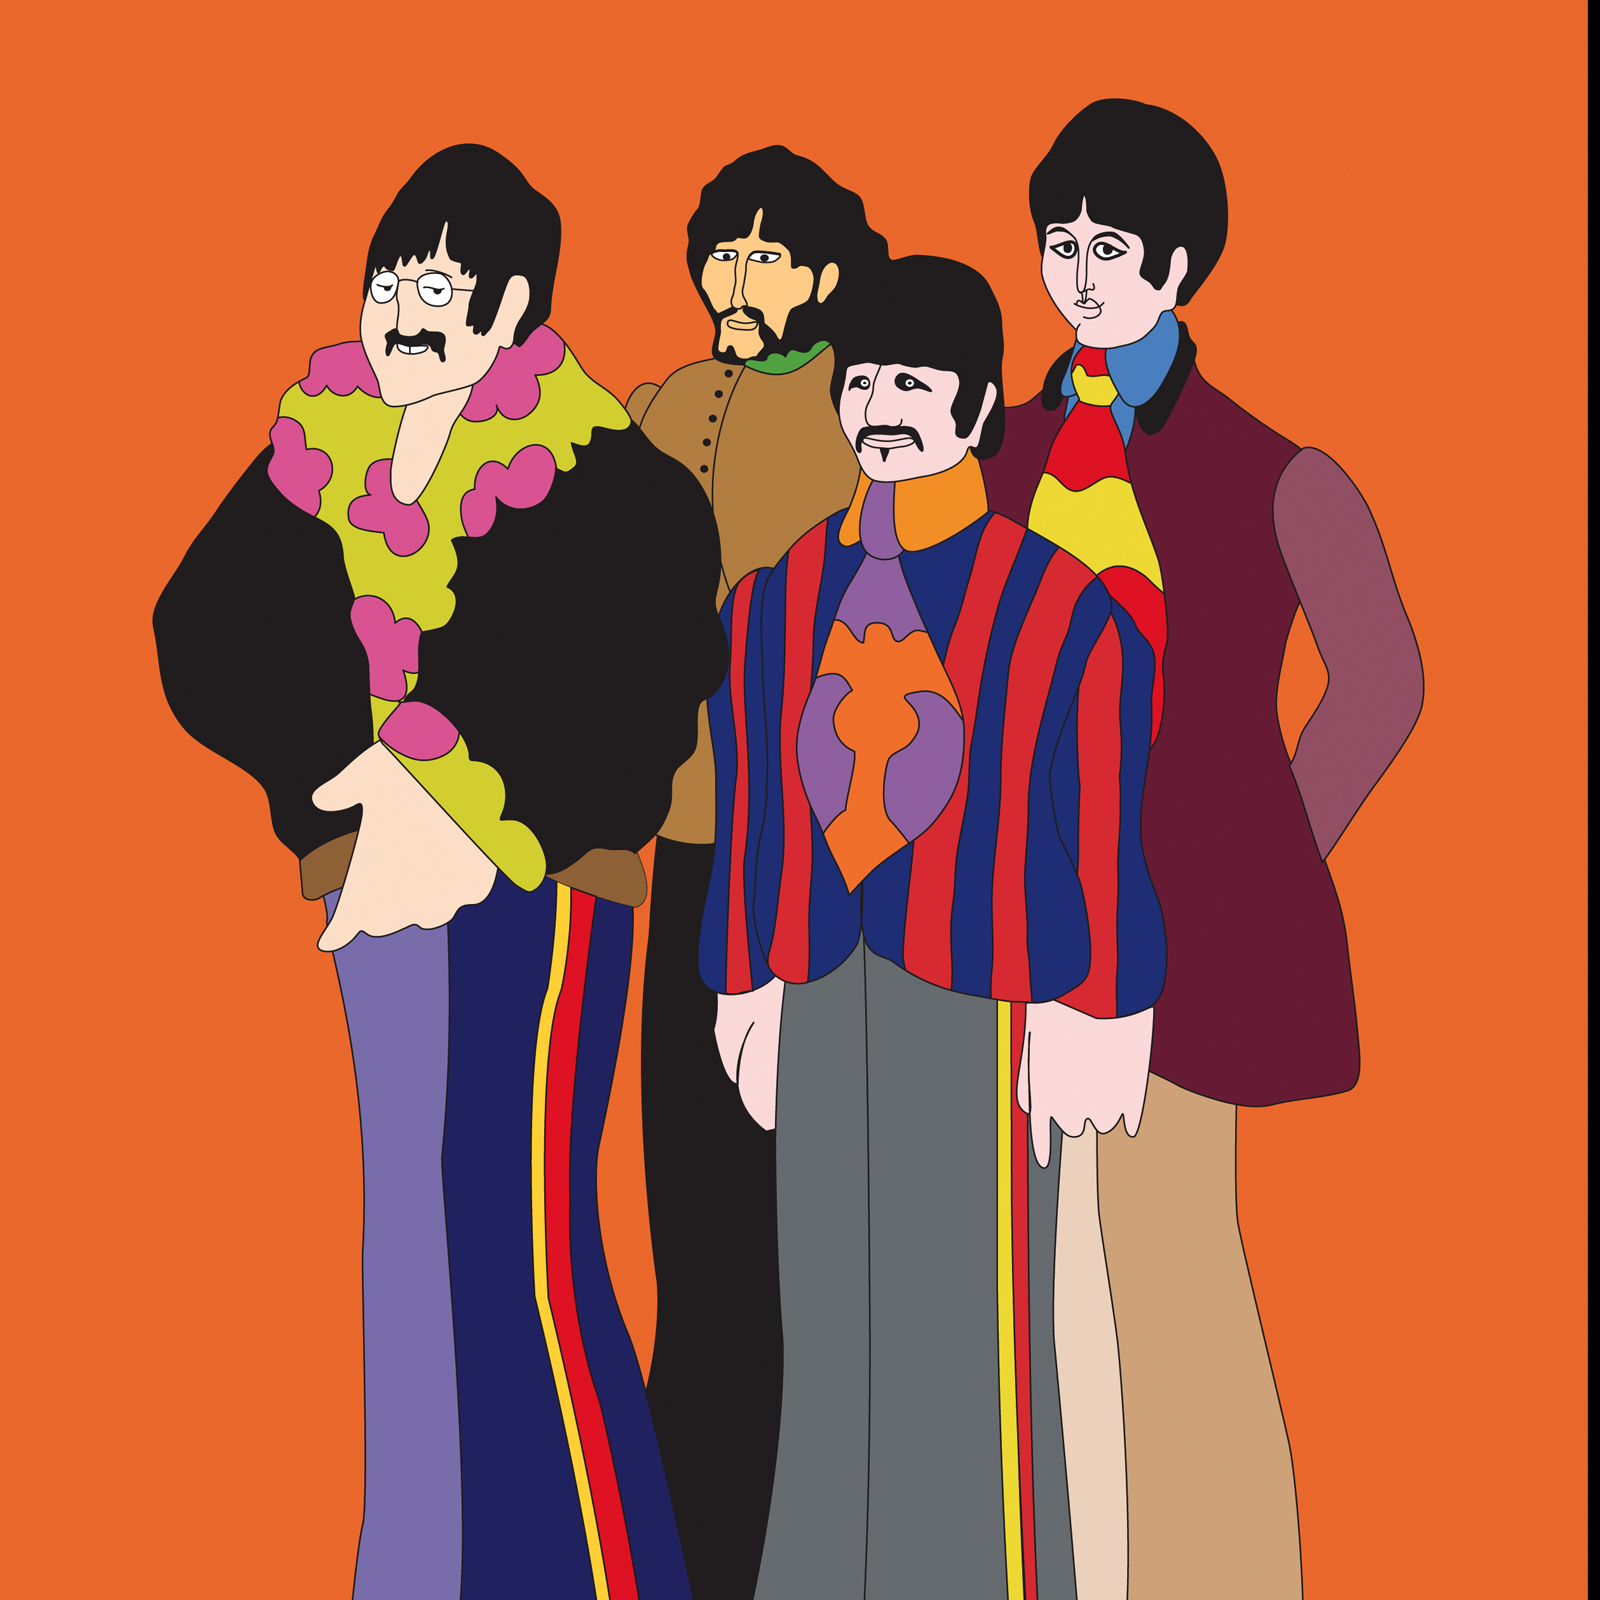 The Beatles in Yellow Submarine